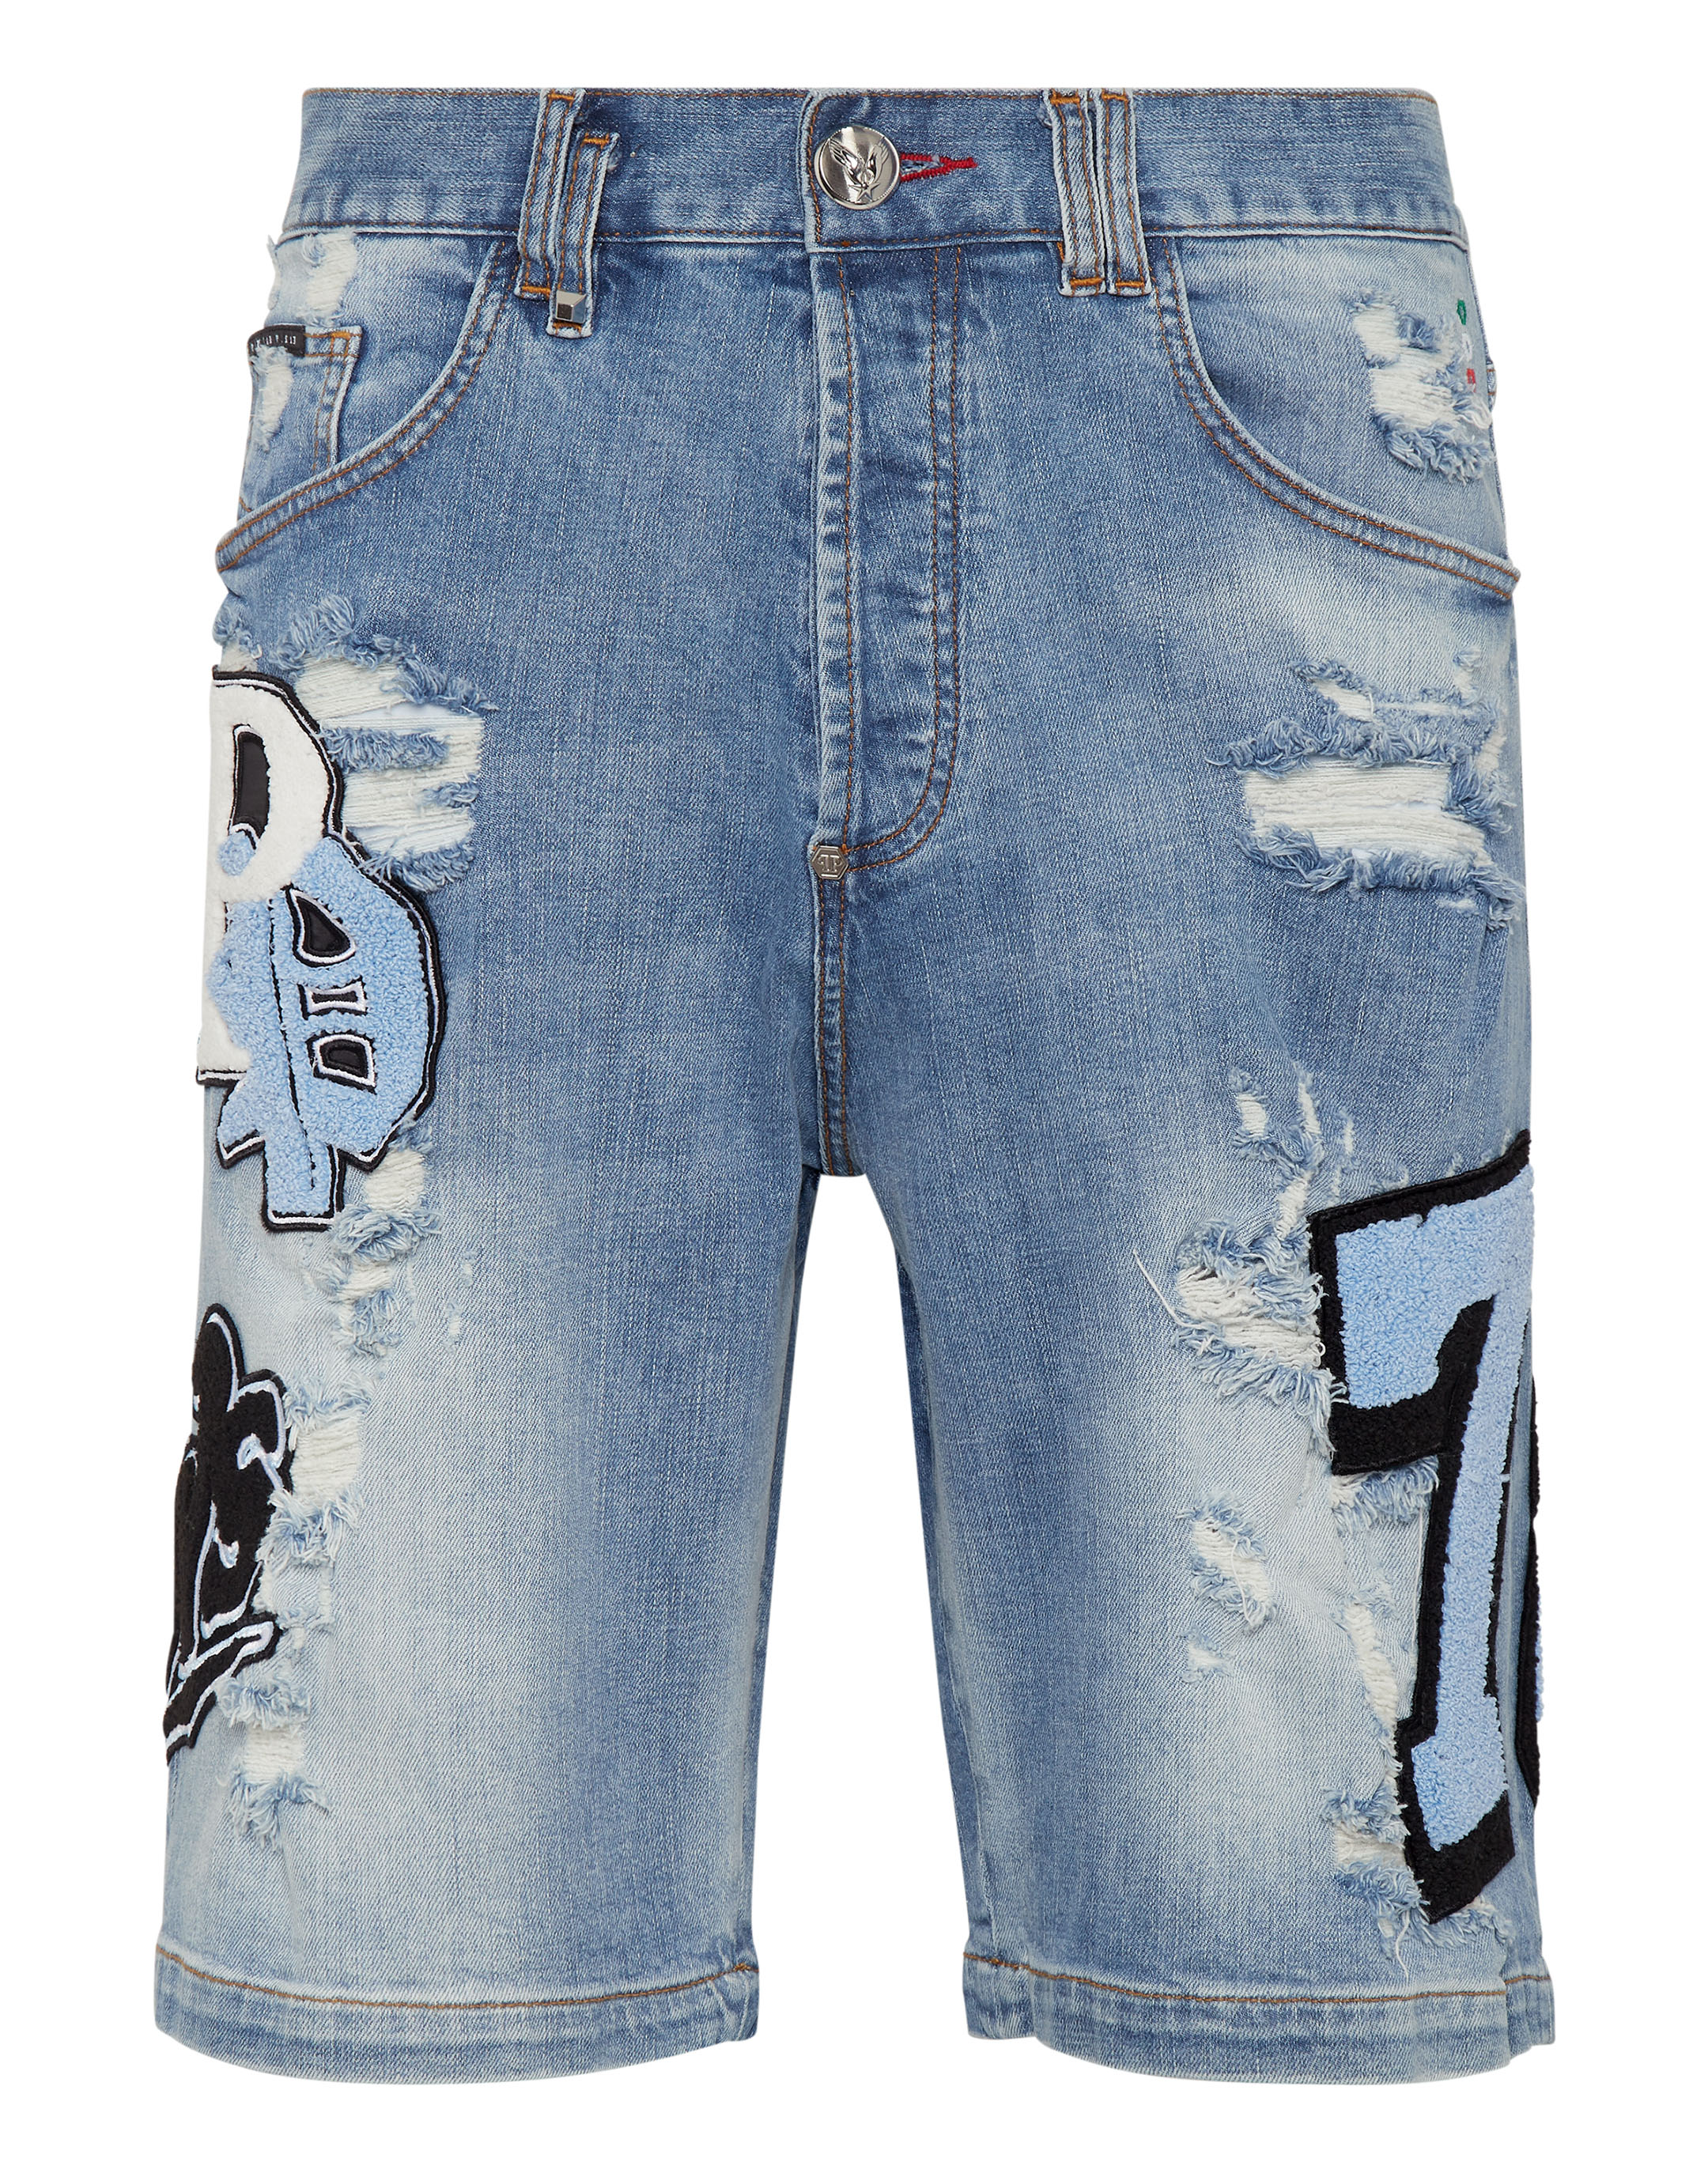 Buy SELX-Men Summer Loose Denim Short Pant Extended Size 3/4 Jean Pants  Dark Blue US XS at Amazon.in